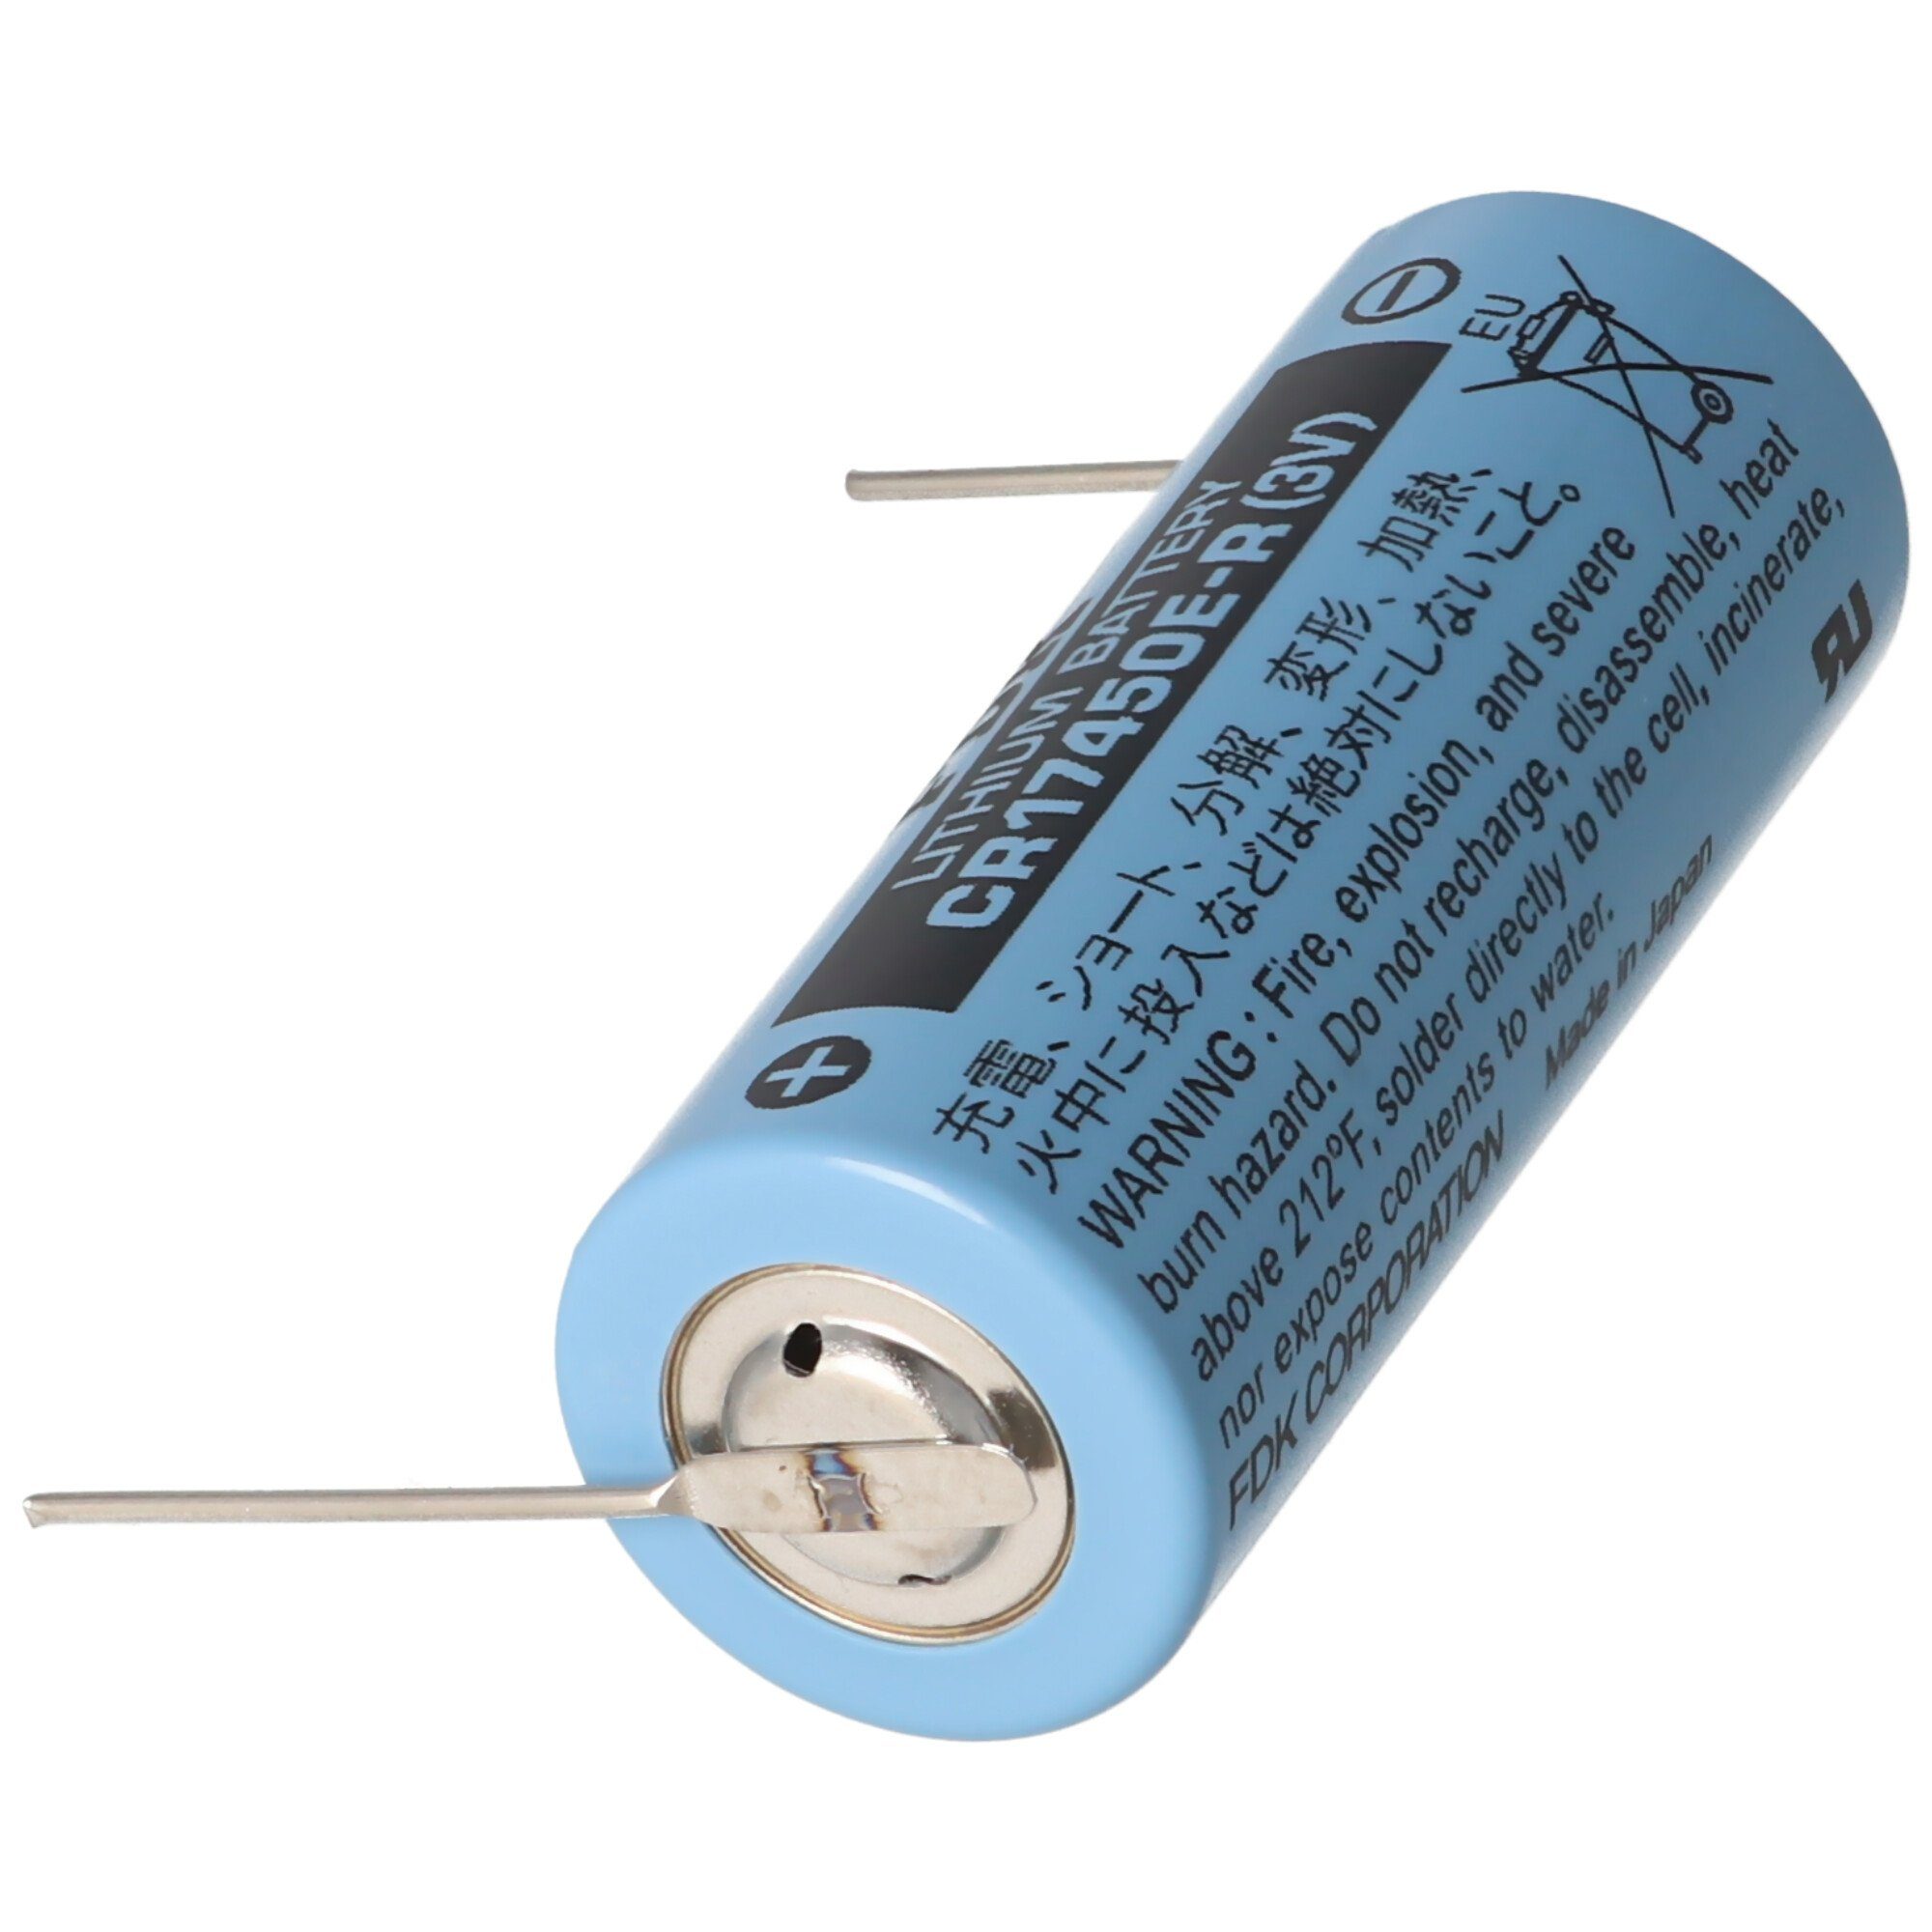 Sanyo Sanyo Lithium (Lötpaddel) FD CR17450E-R Lötdraht Batterie V) Size (3,0 A, Batterie, von